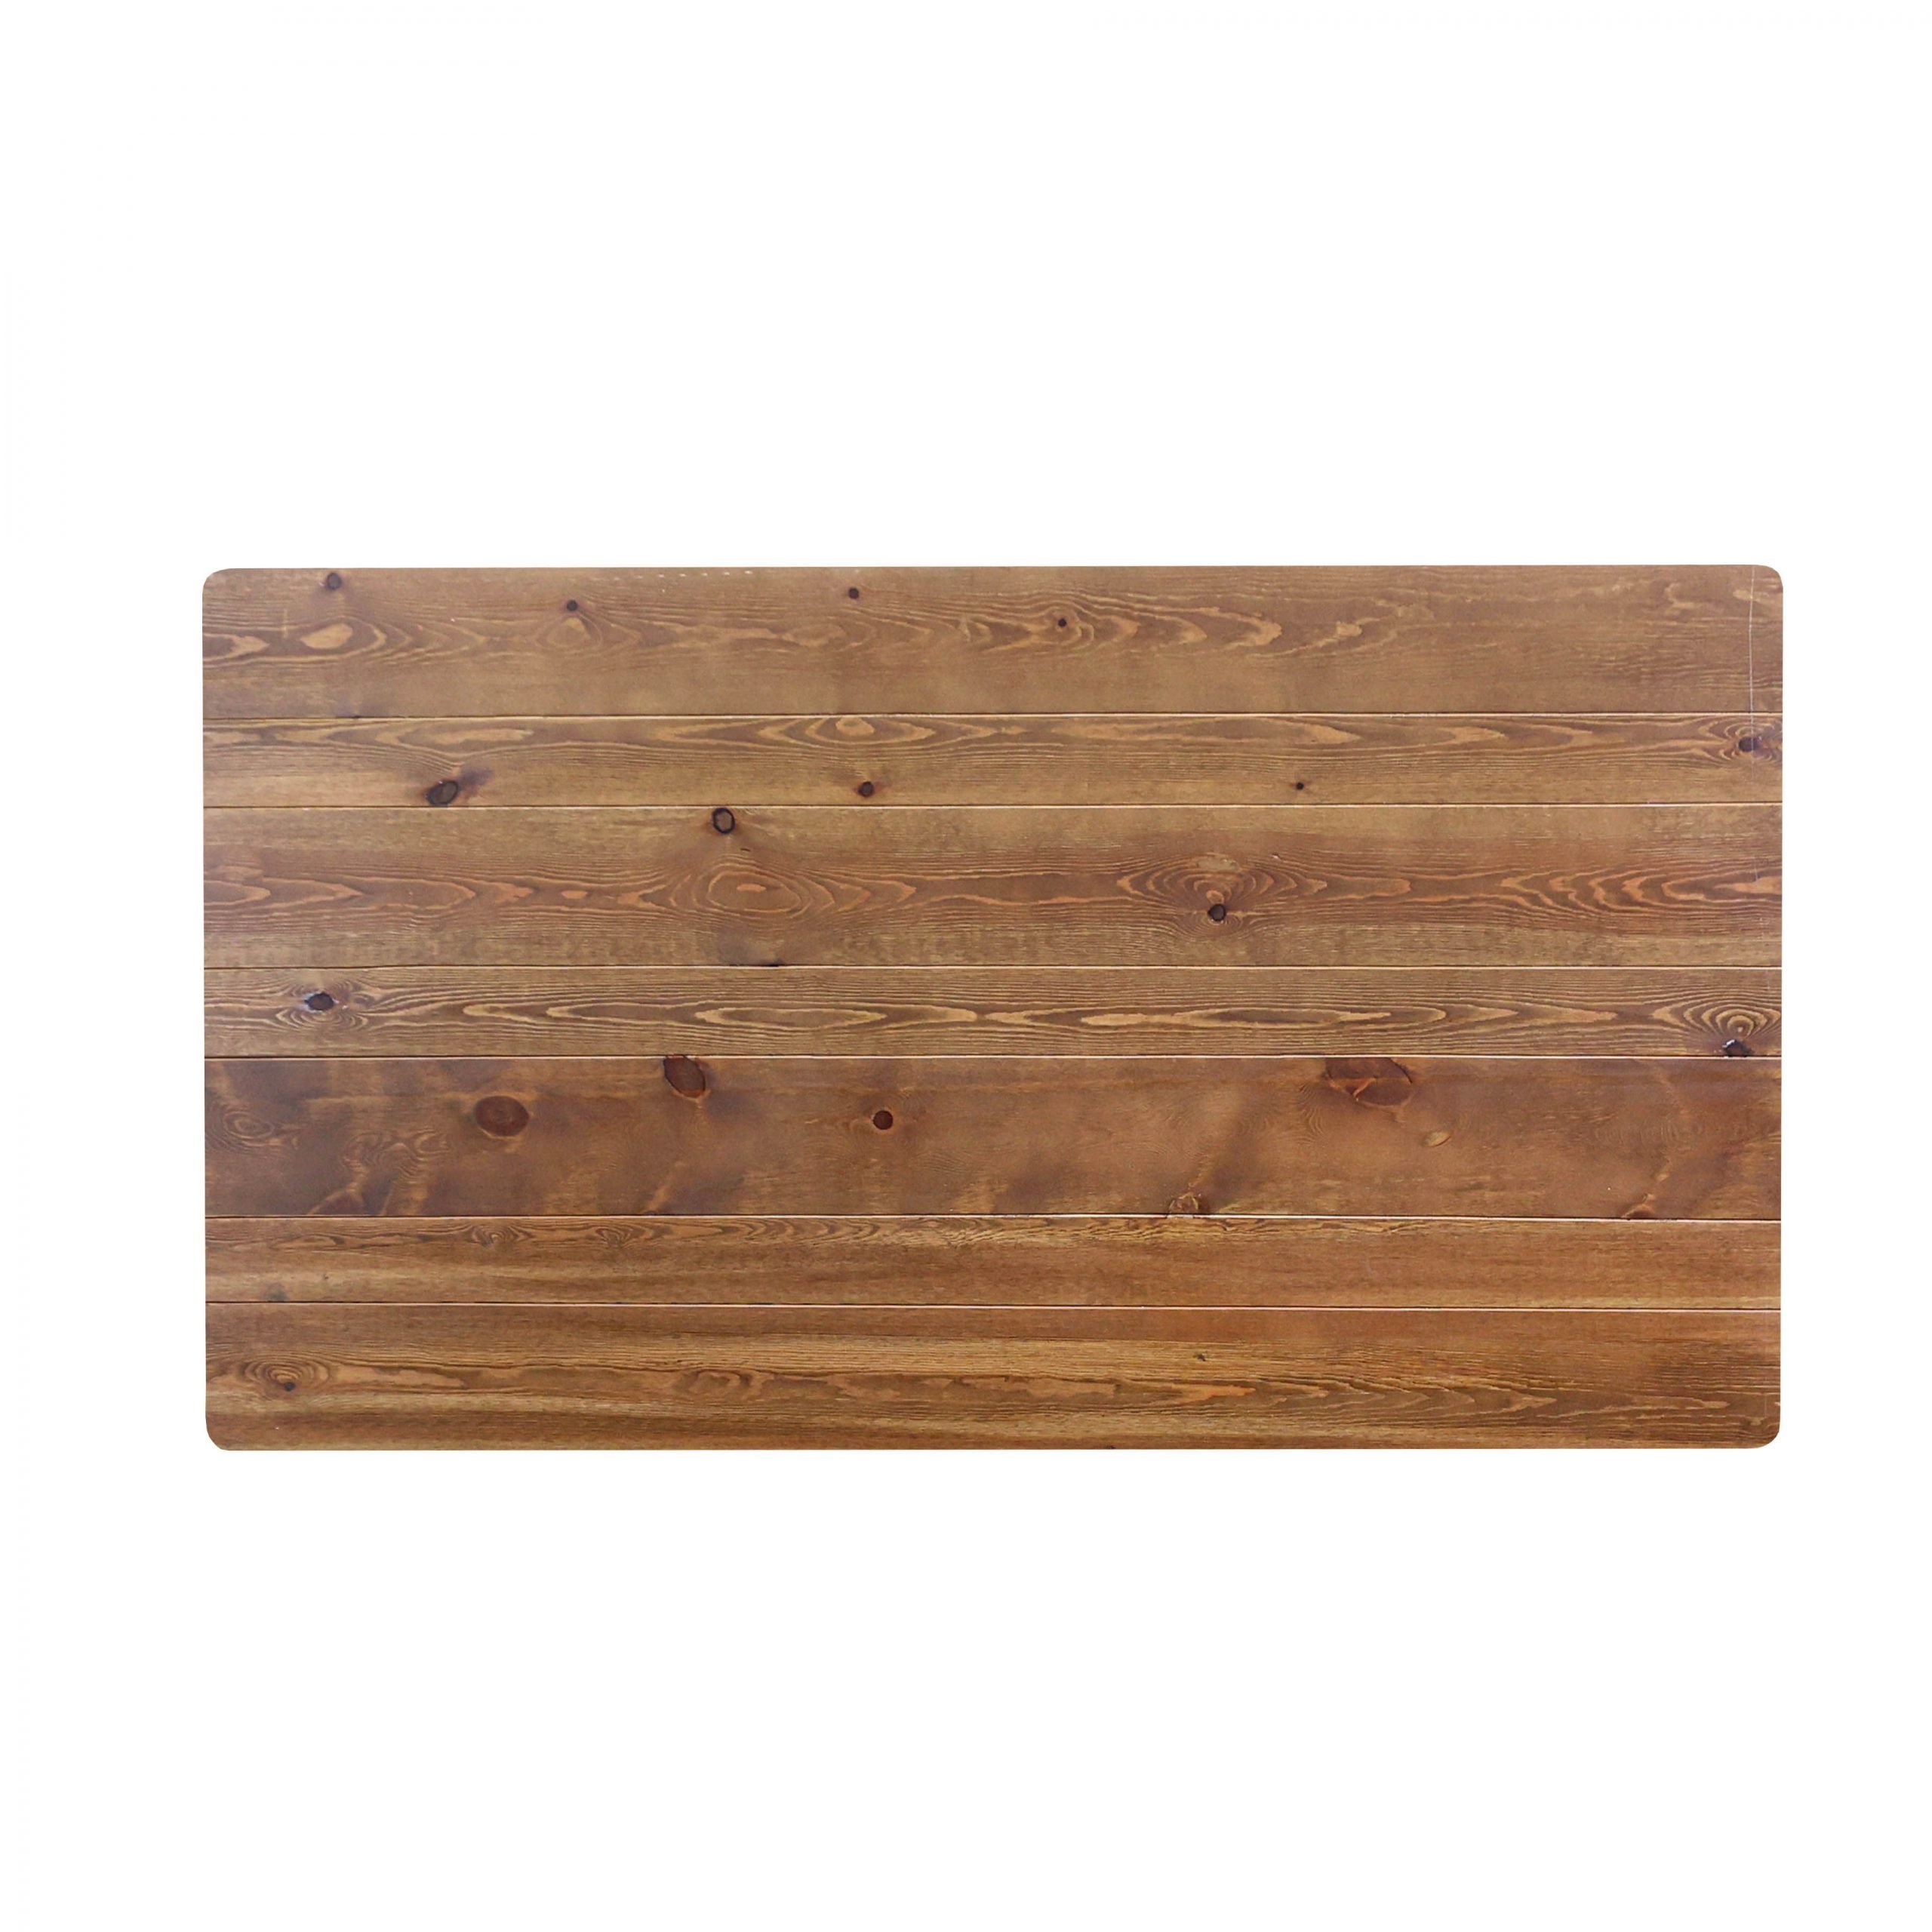 96 x 40 Rustic Pine Folding Farm Table